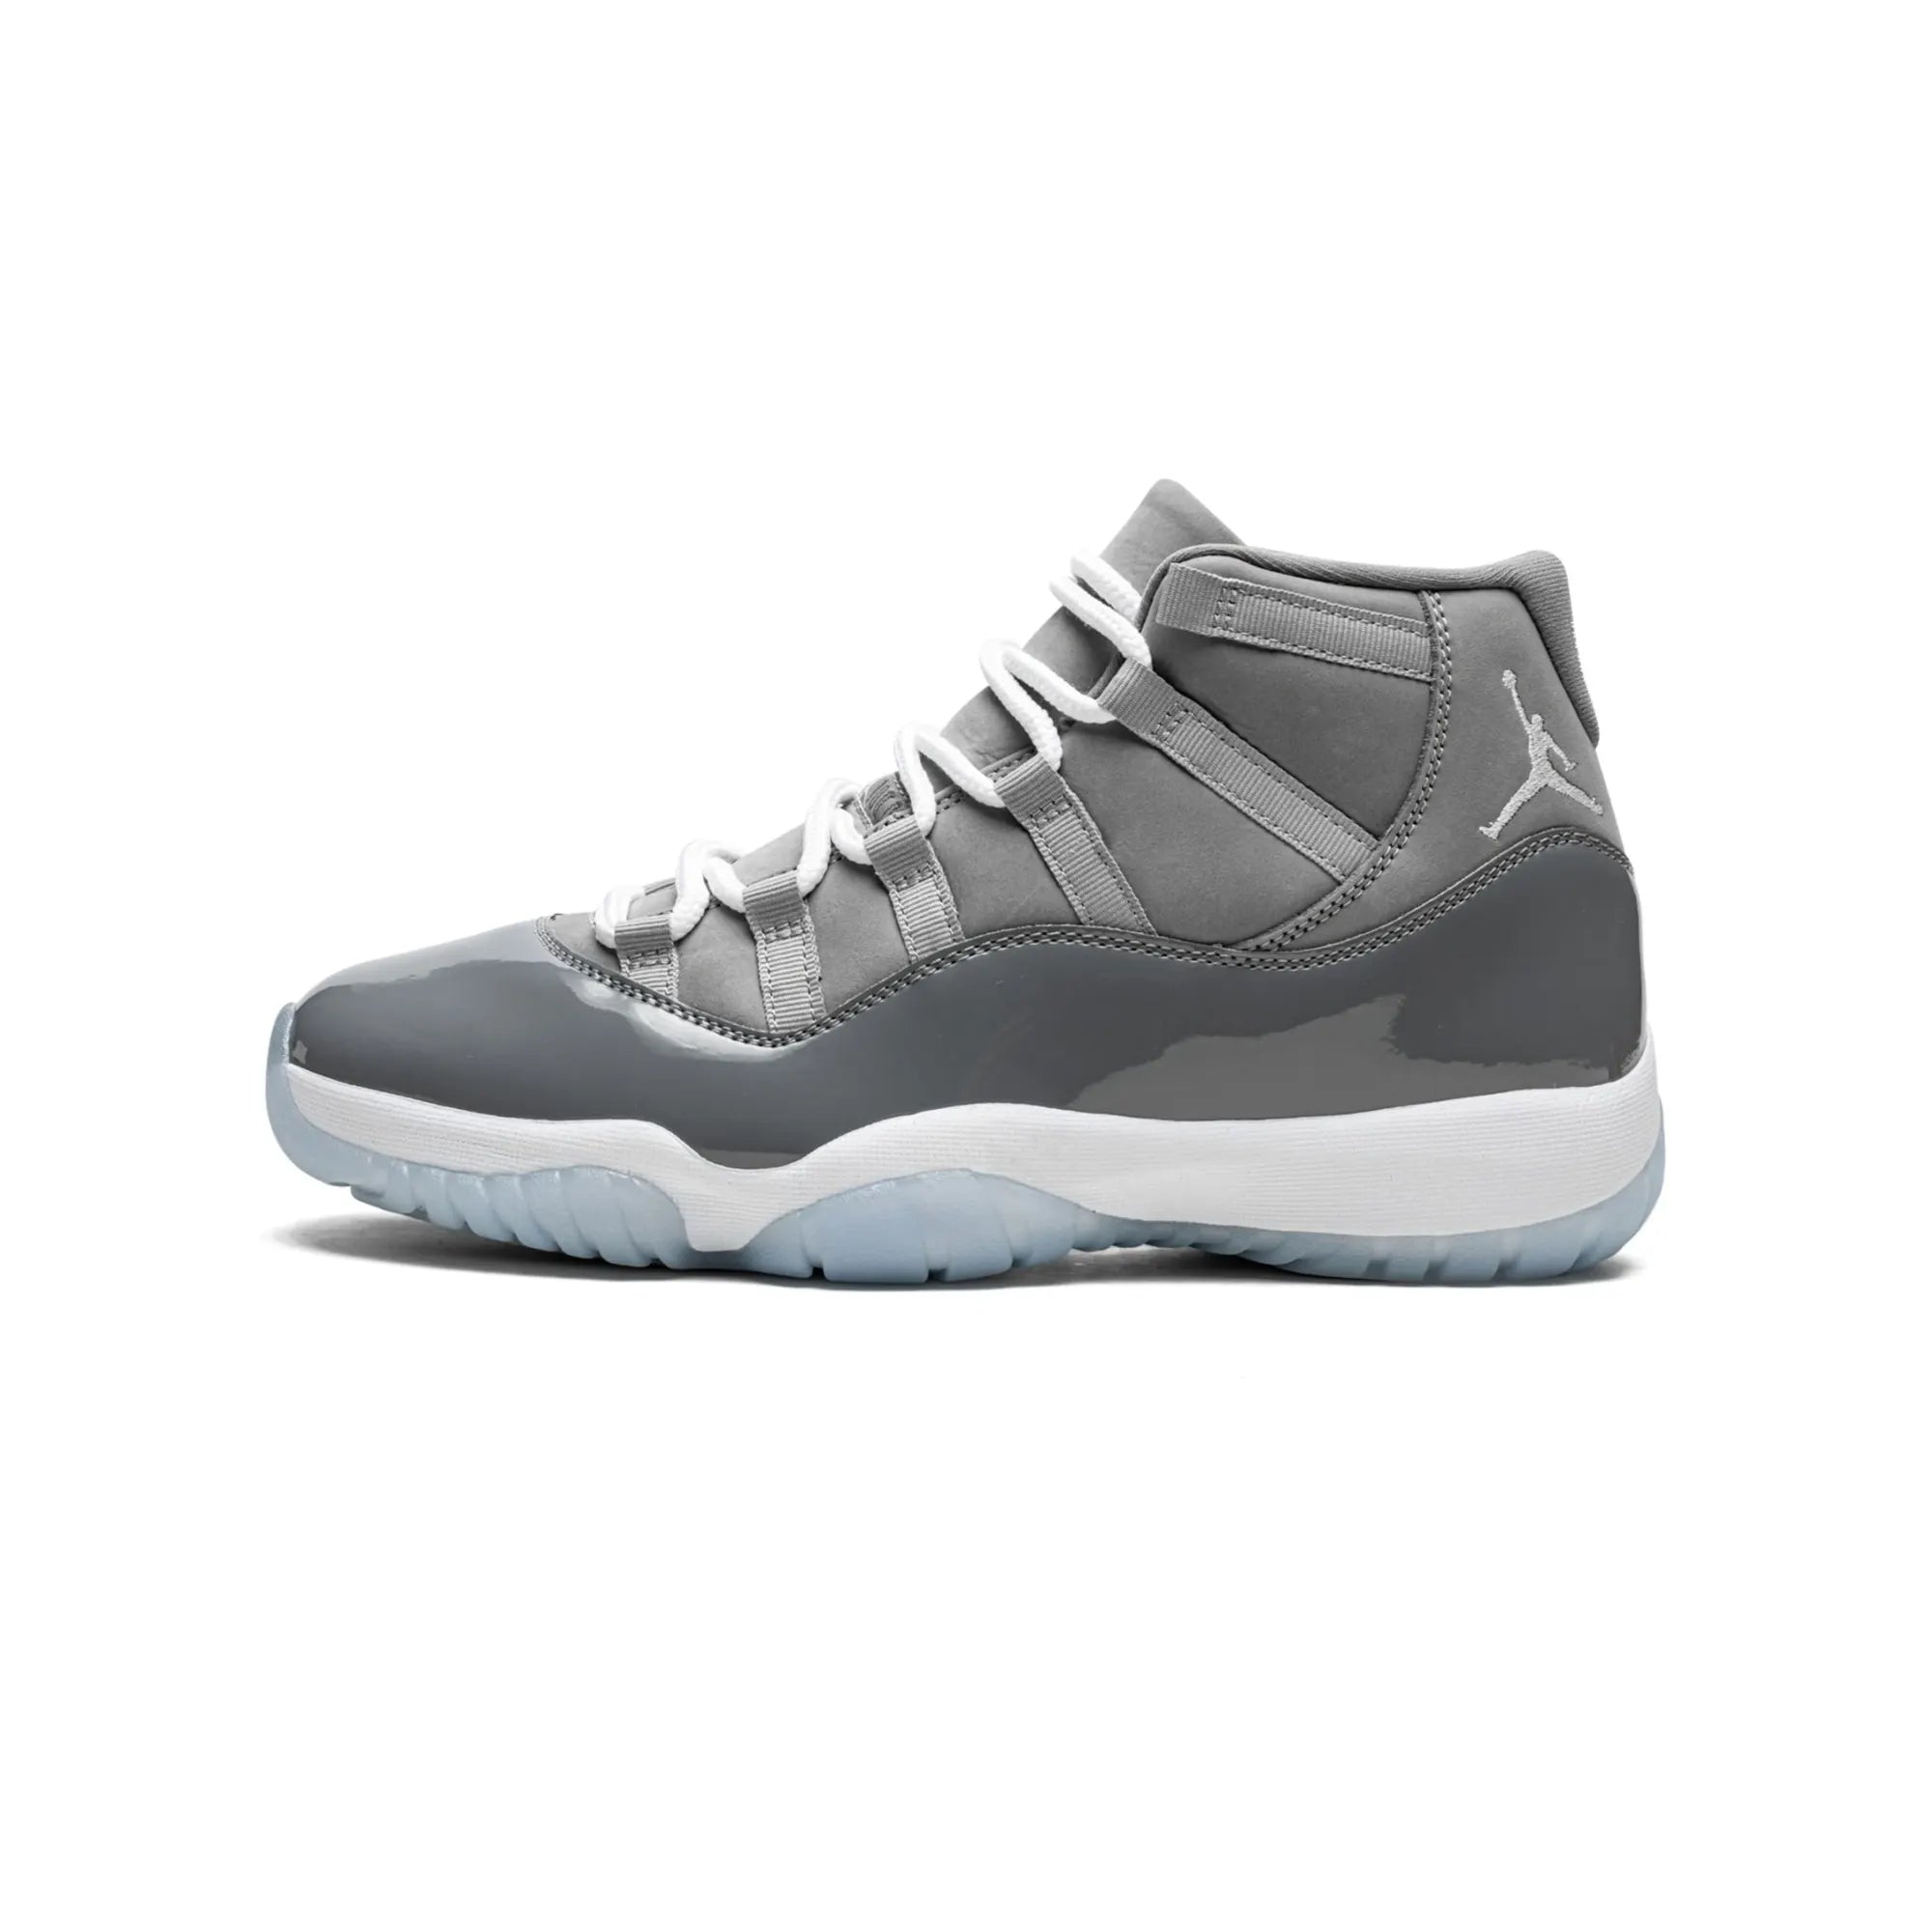 Jordan 11 Retro Cool Grey (2021) | ABco